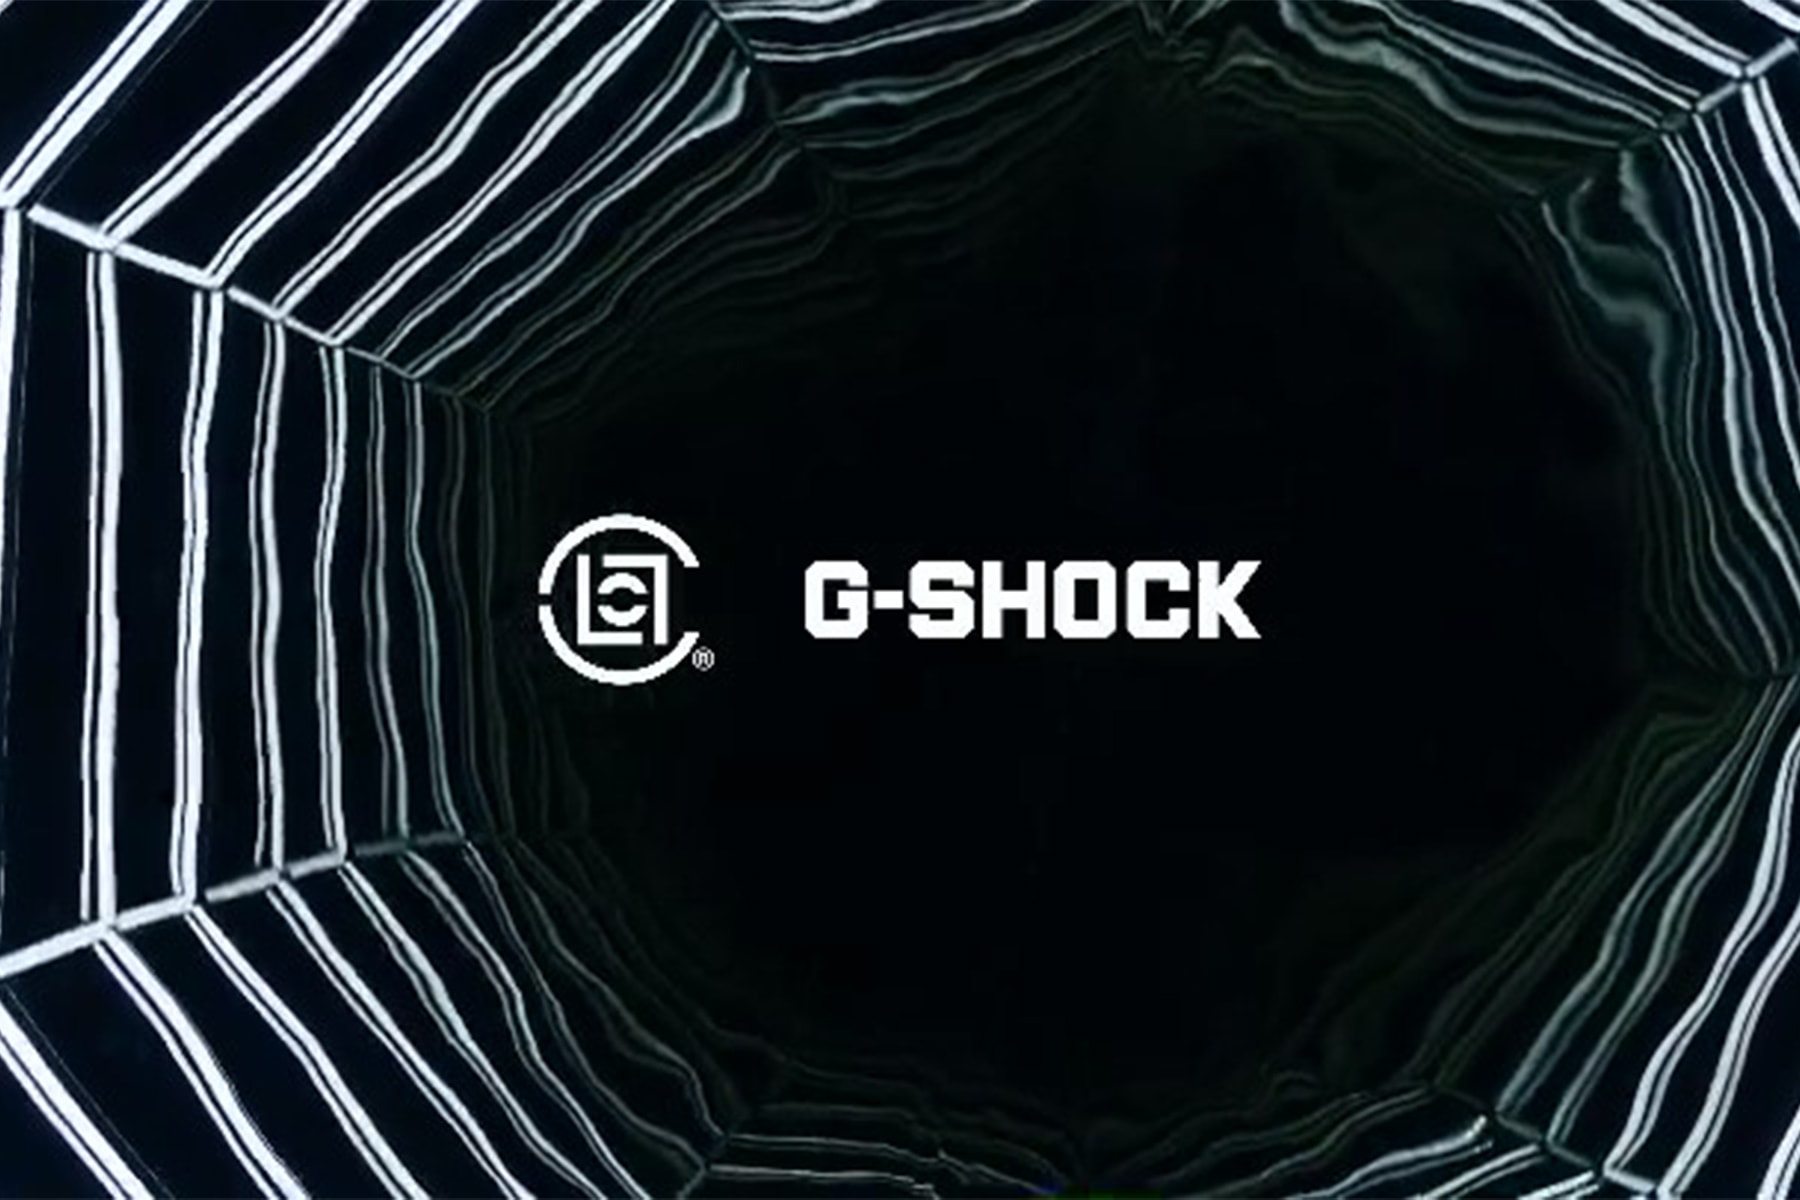 CLOT x G-Shock 全新聯乘錶款率先曝光